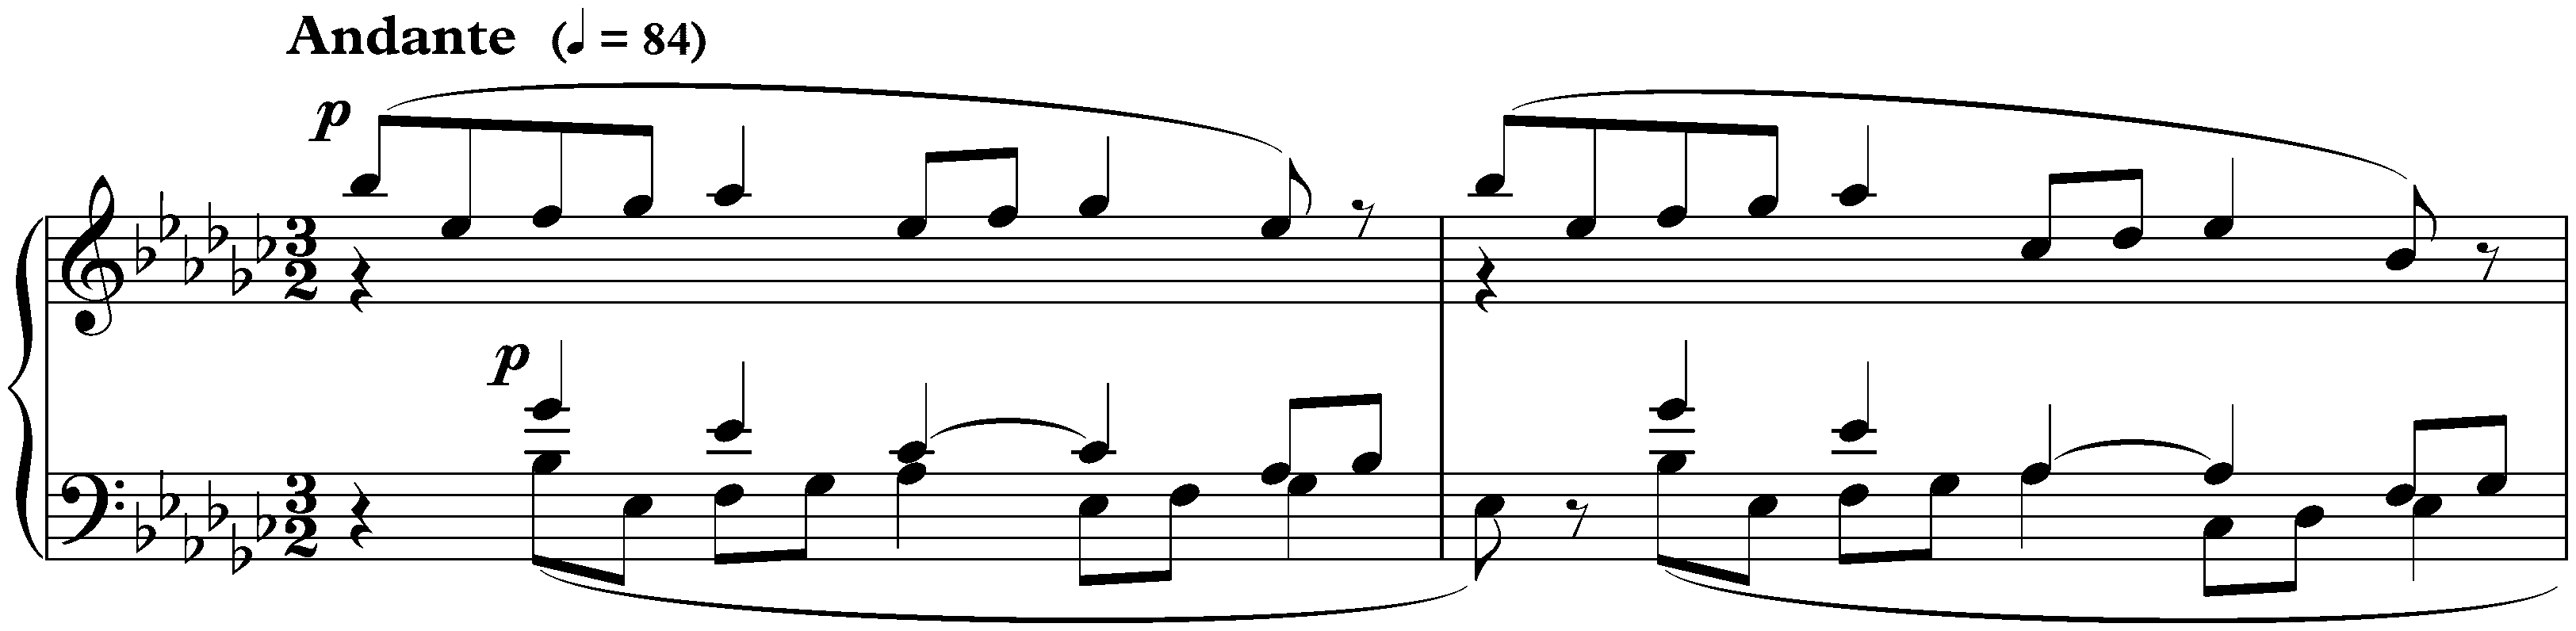 Neuf Préludes, op. 103; 6. E-flat minor